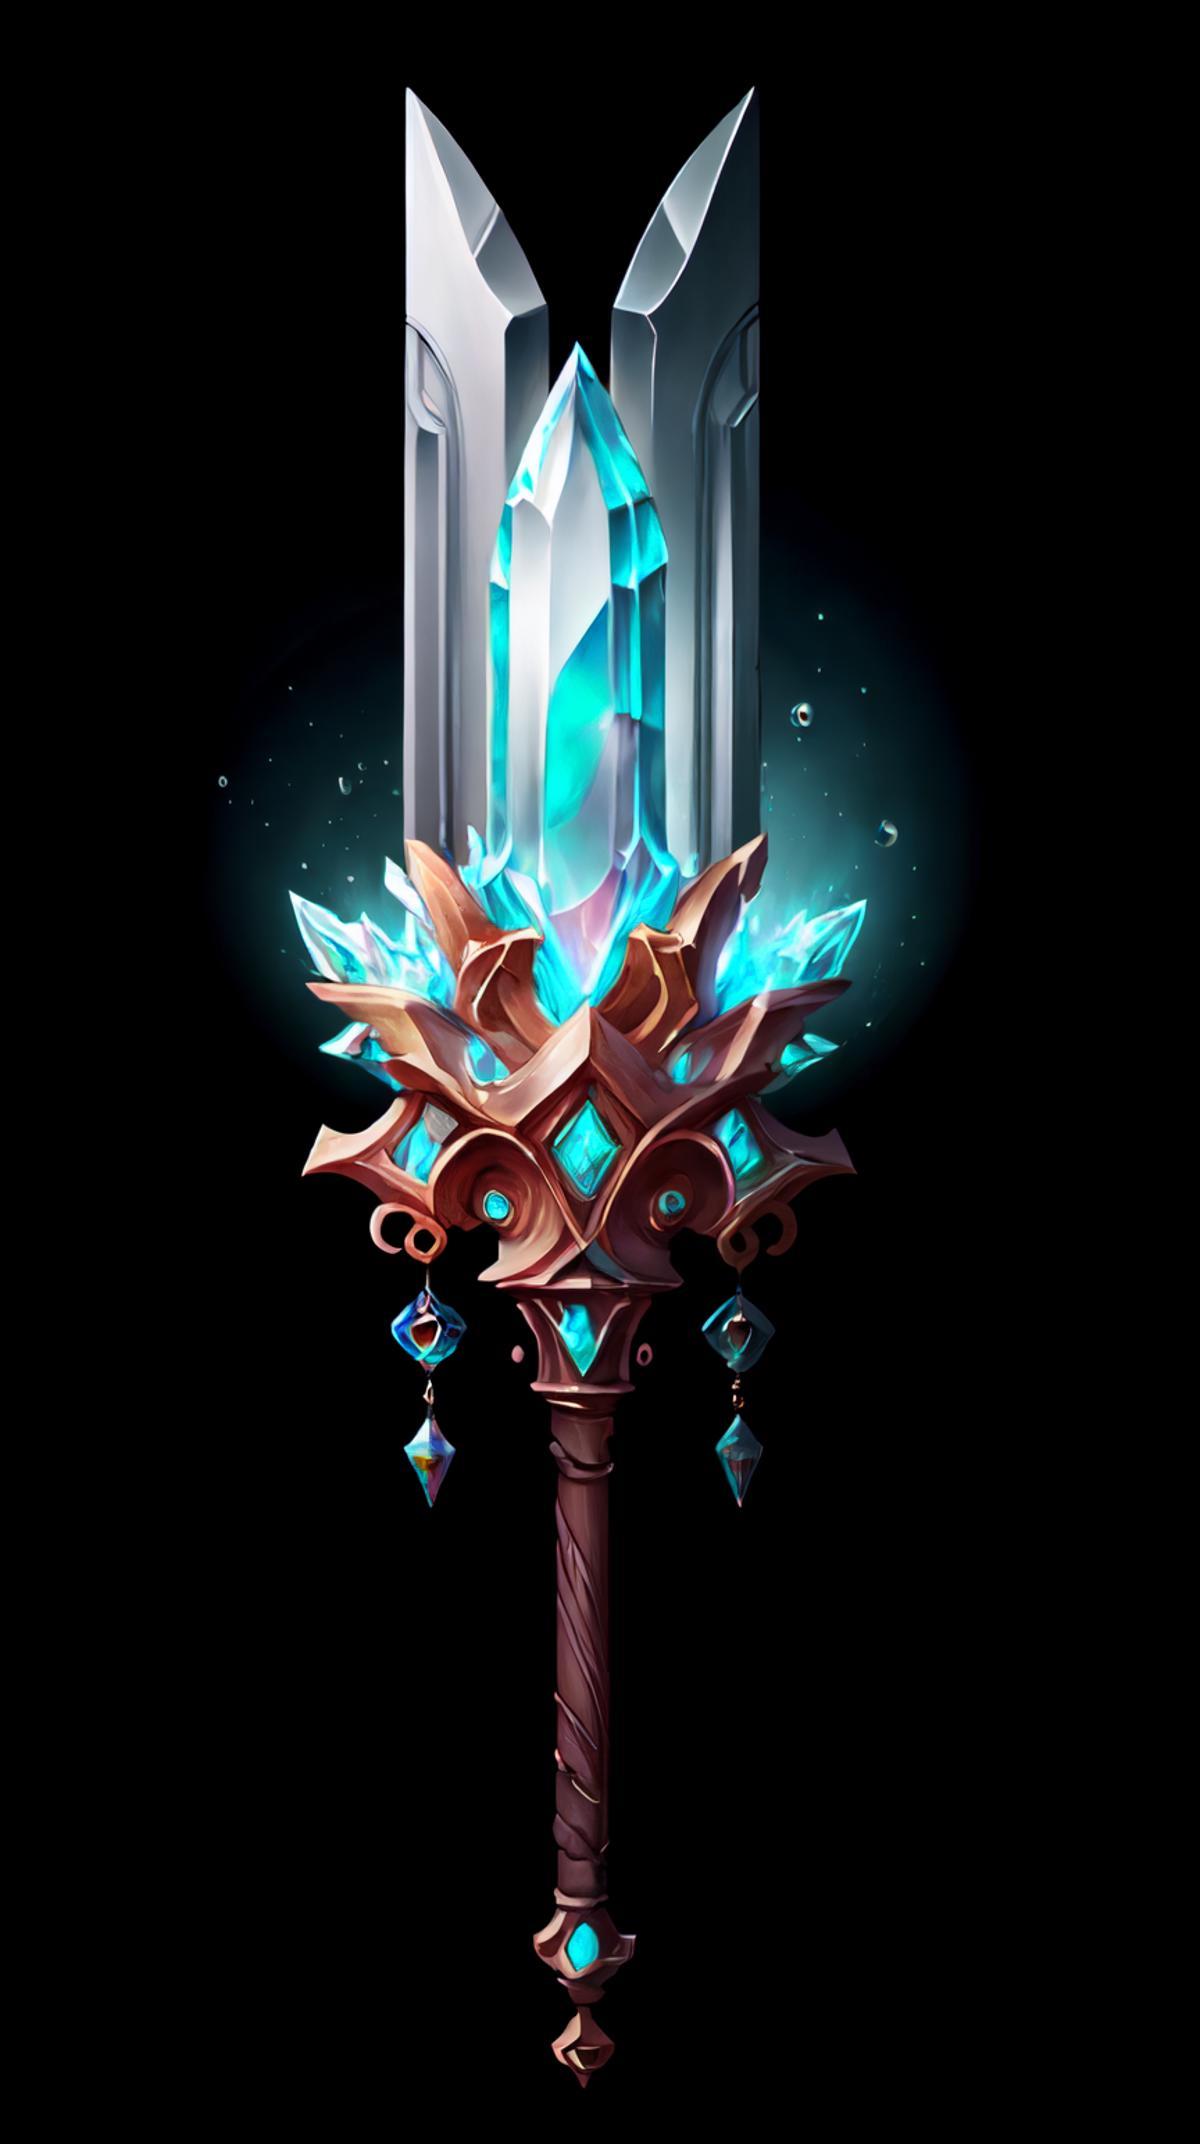 Pecha Swords Generator image by mnemic